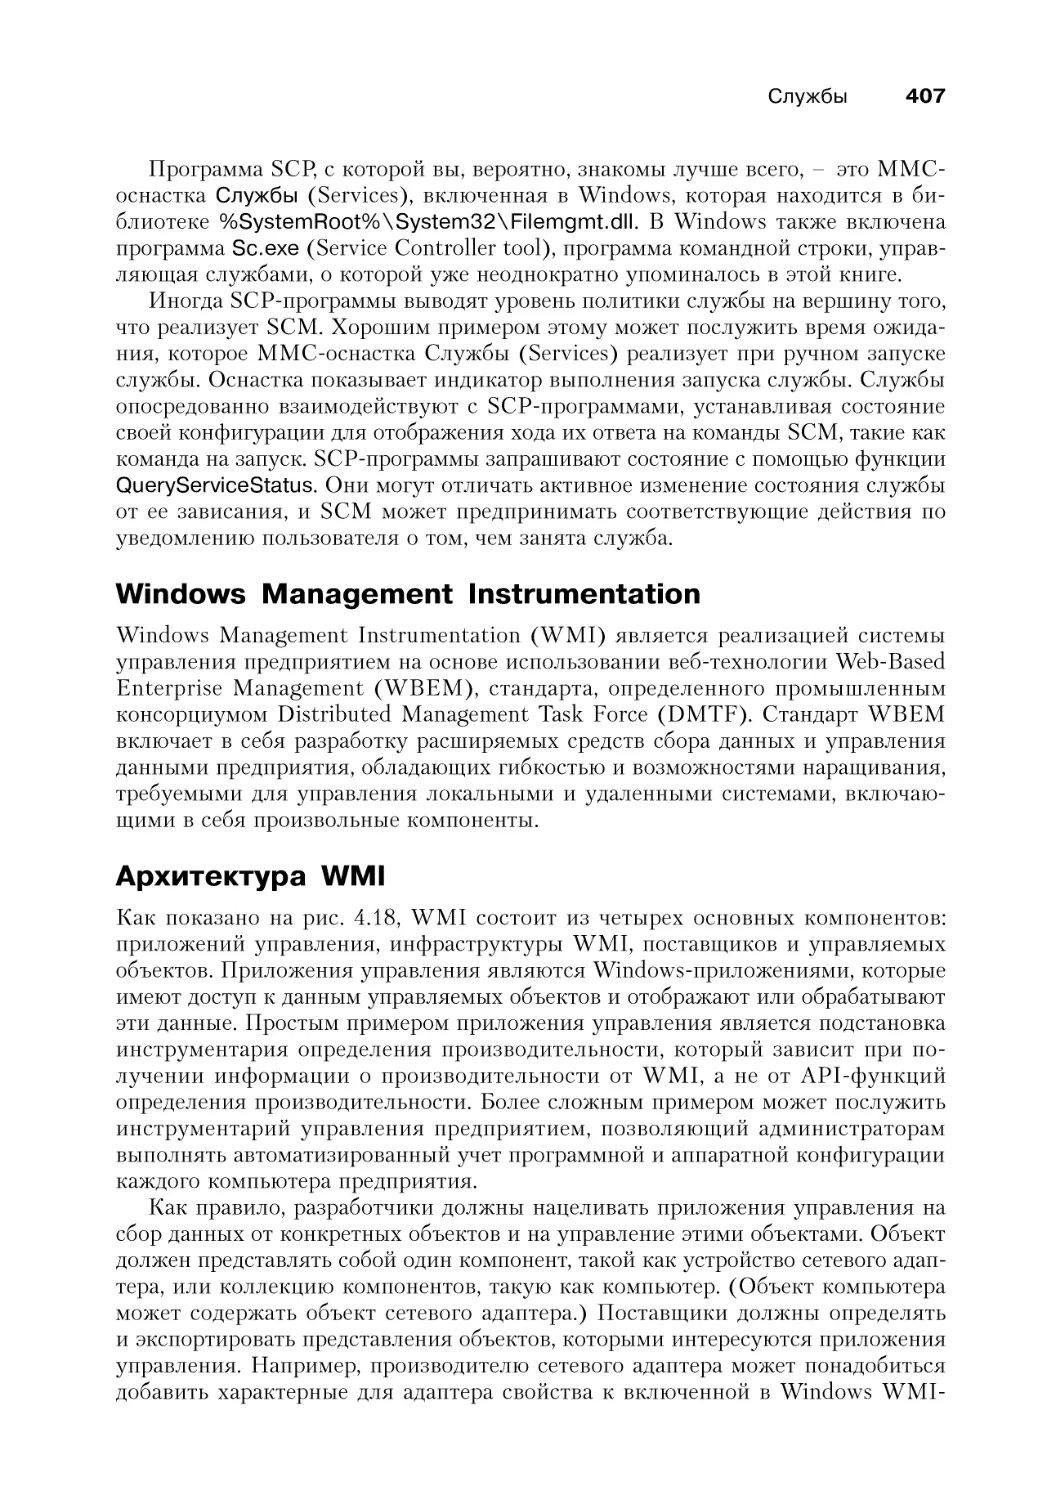 Windows Management Instrumentation
Архитектура WMI